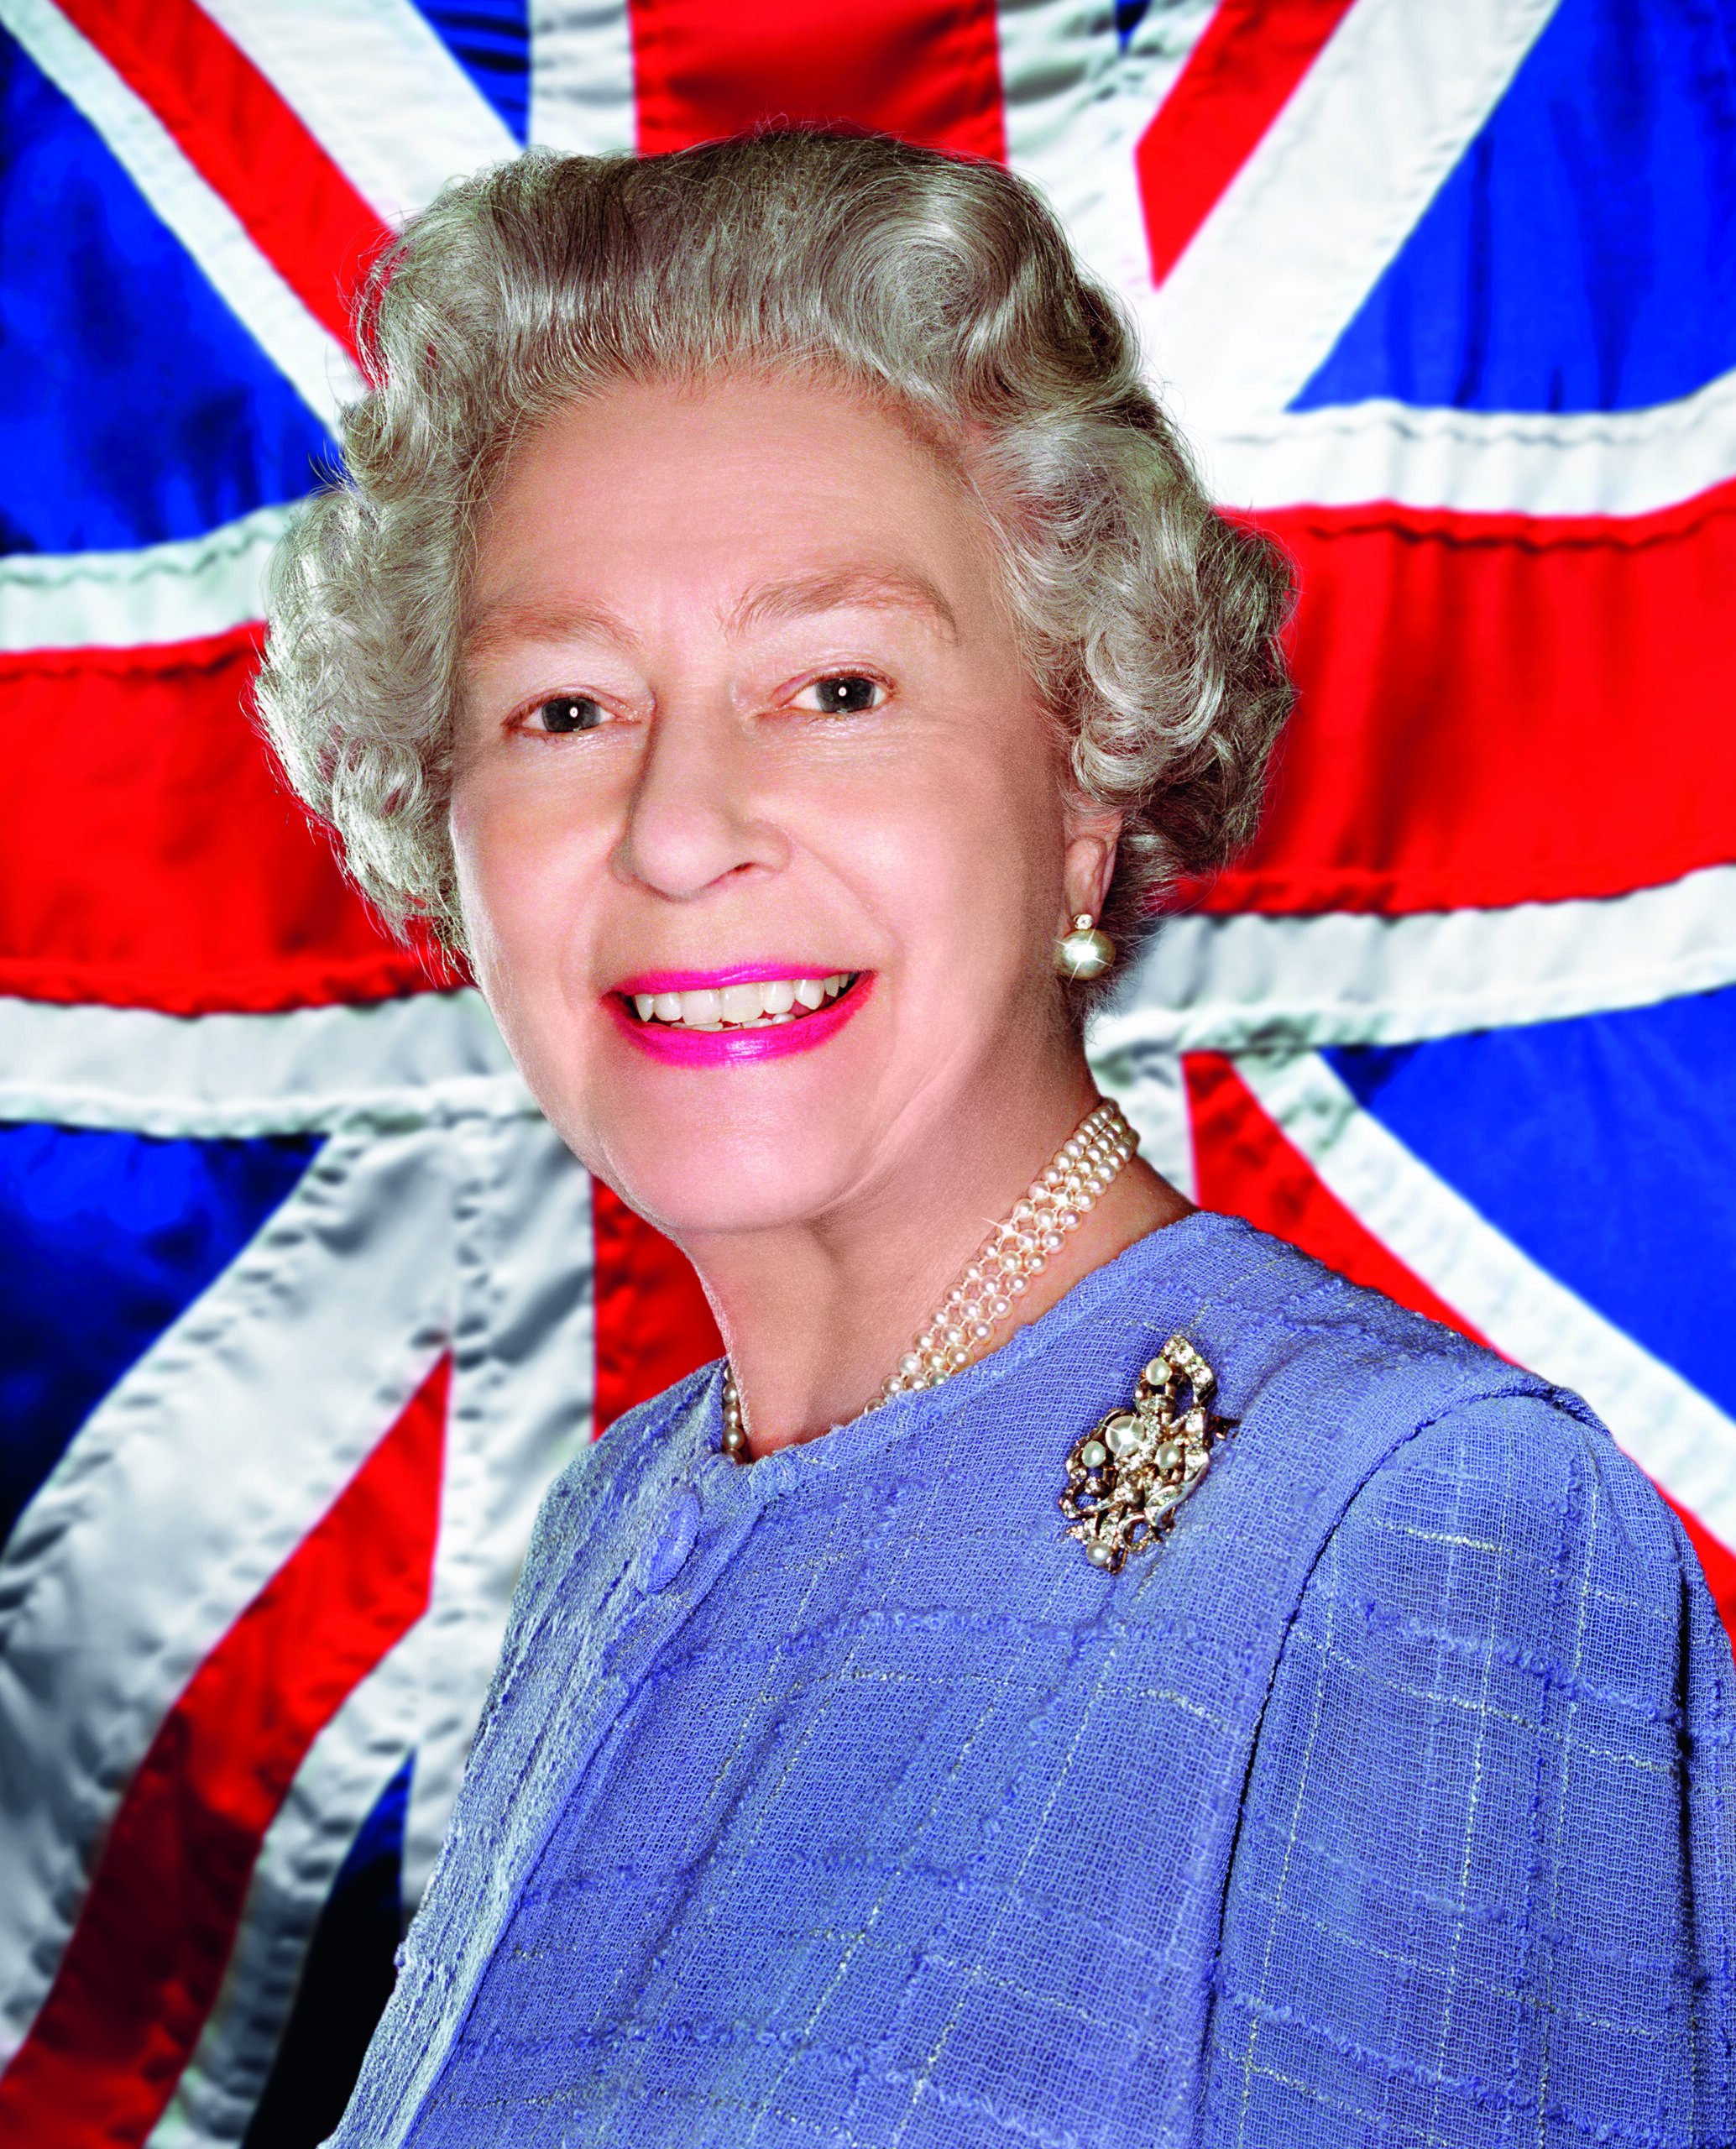 Queen Elizabeth agaisnt a Union Jack flag